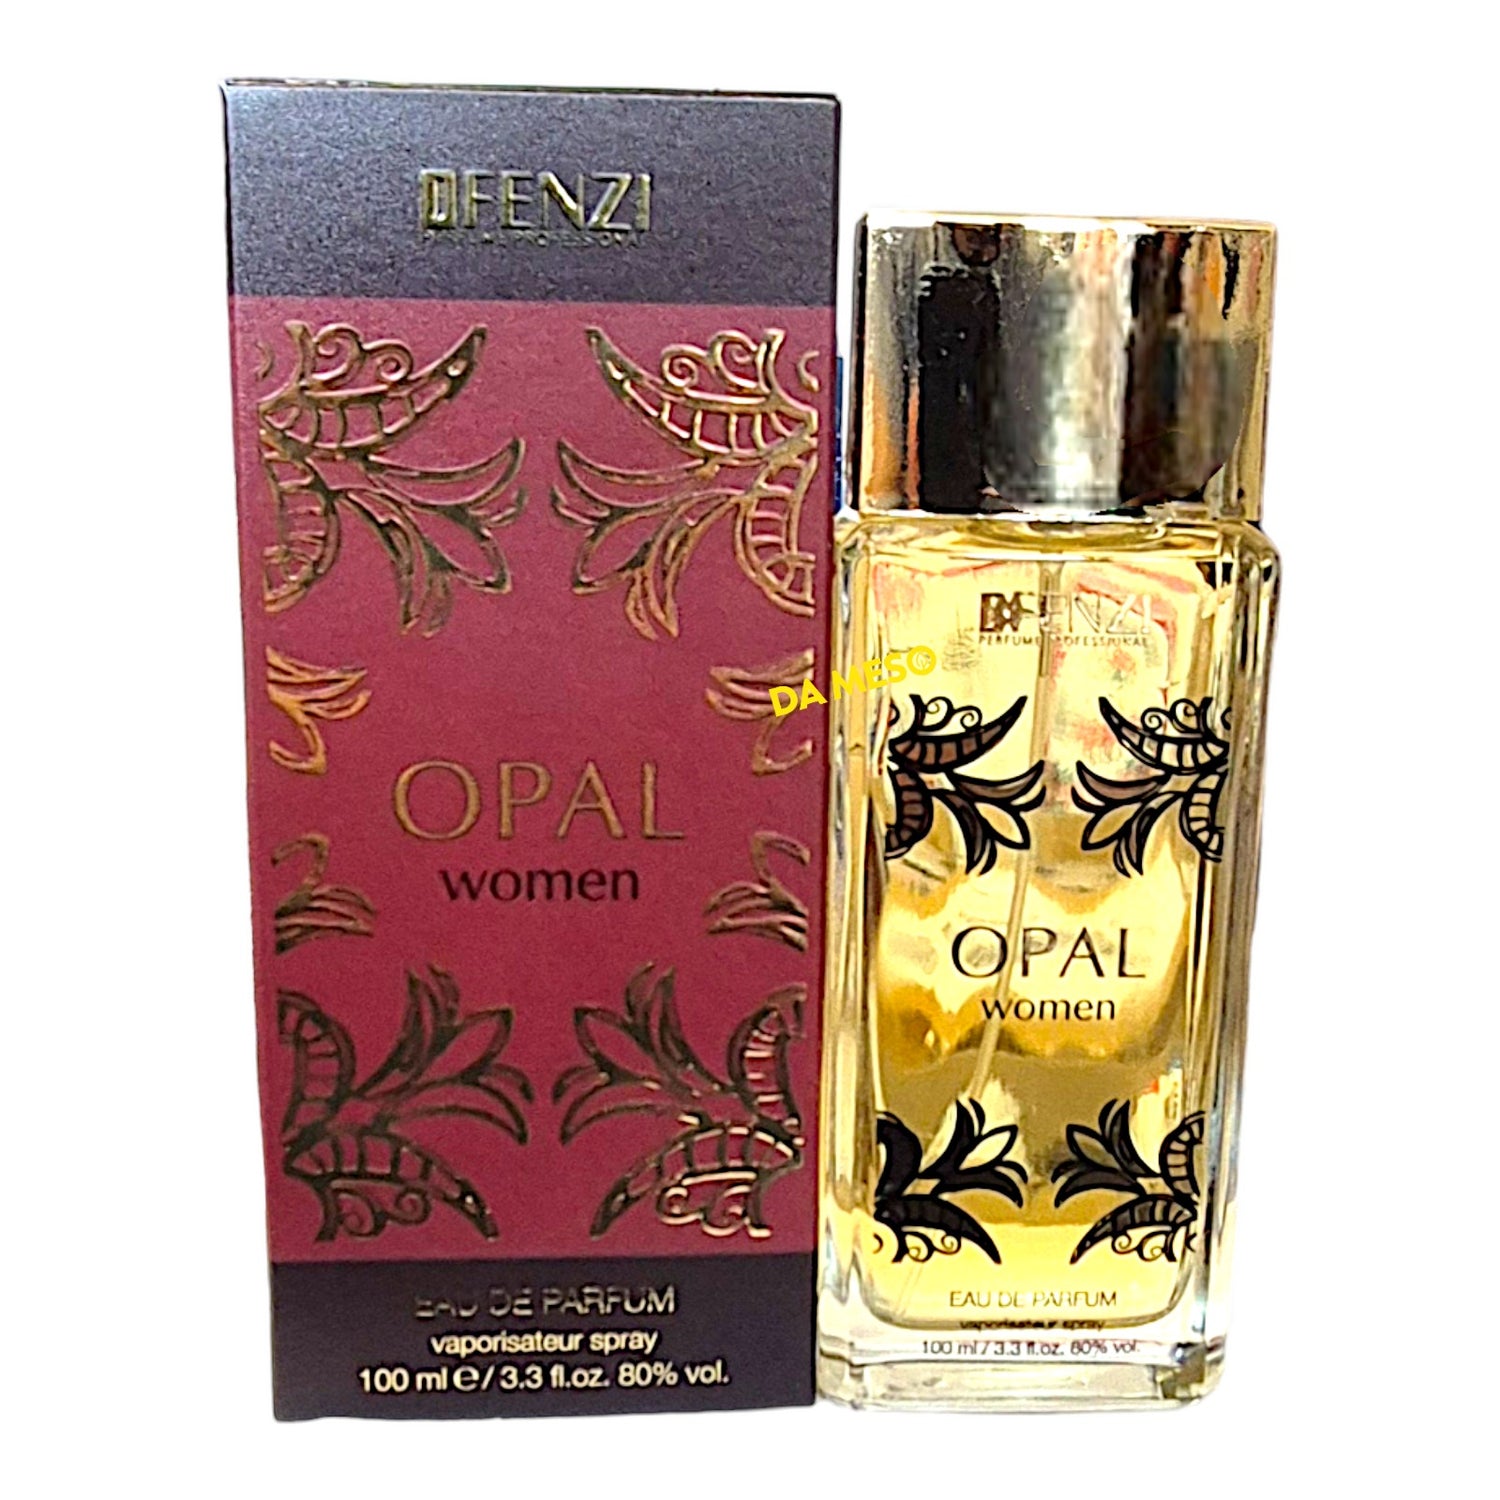 JFenzi OPAL Women Eau de Parfum 100 ml